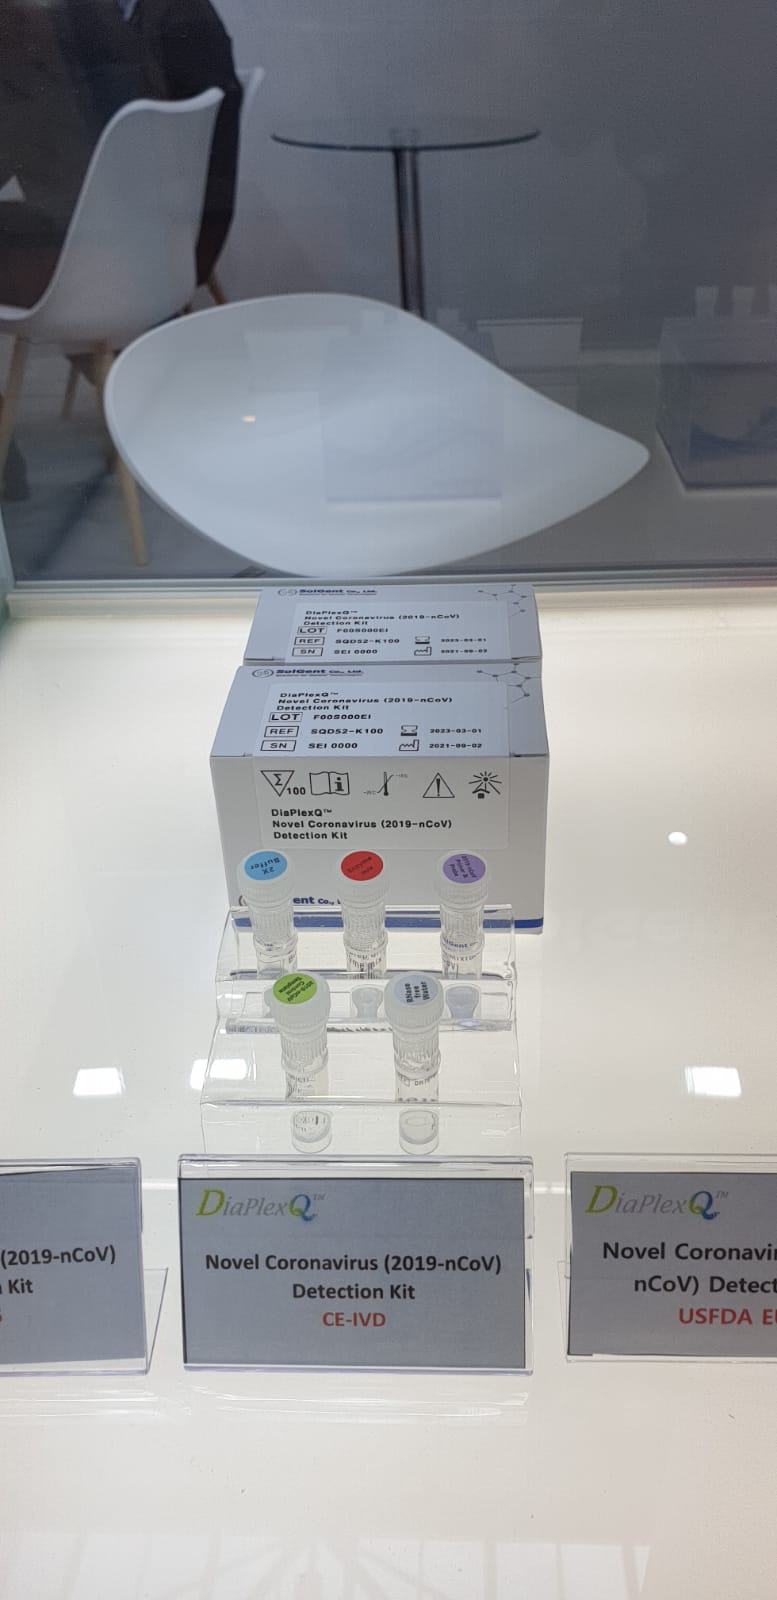 Novel Coronavirus (2019-nCoV) Detection Kit